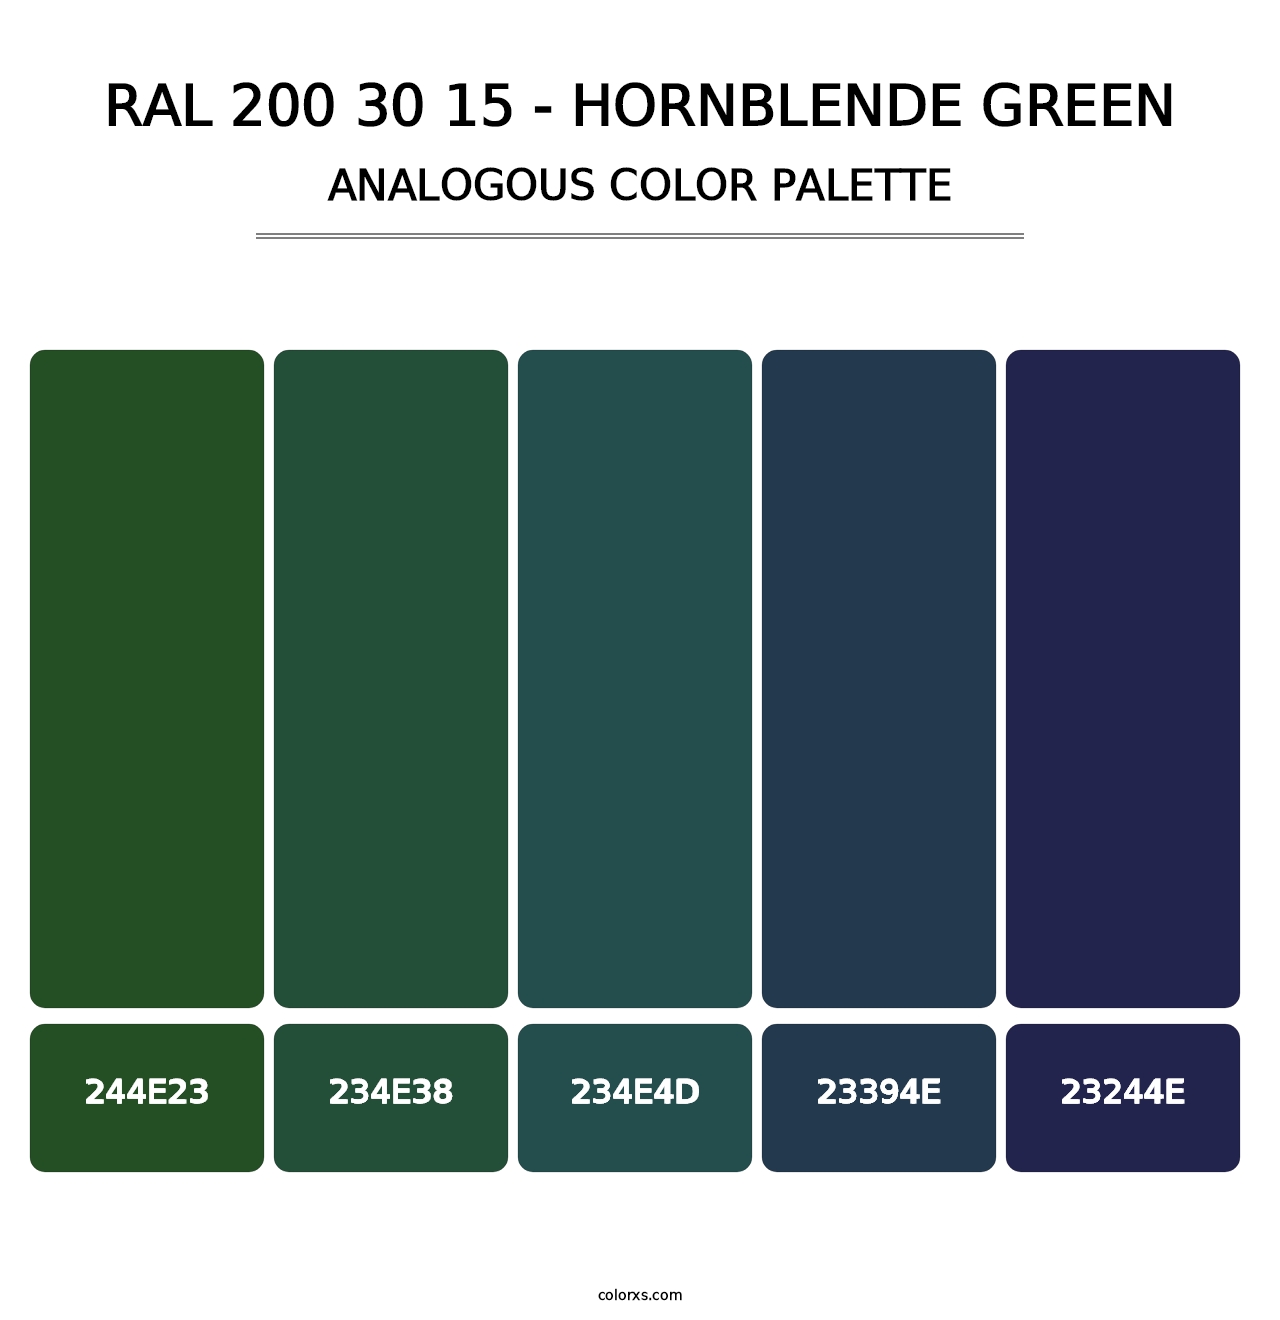 RAL 200 30 15 - Hornblende Green - Analogous Color Palette